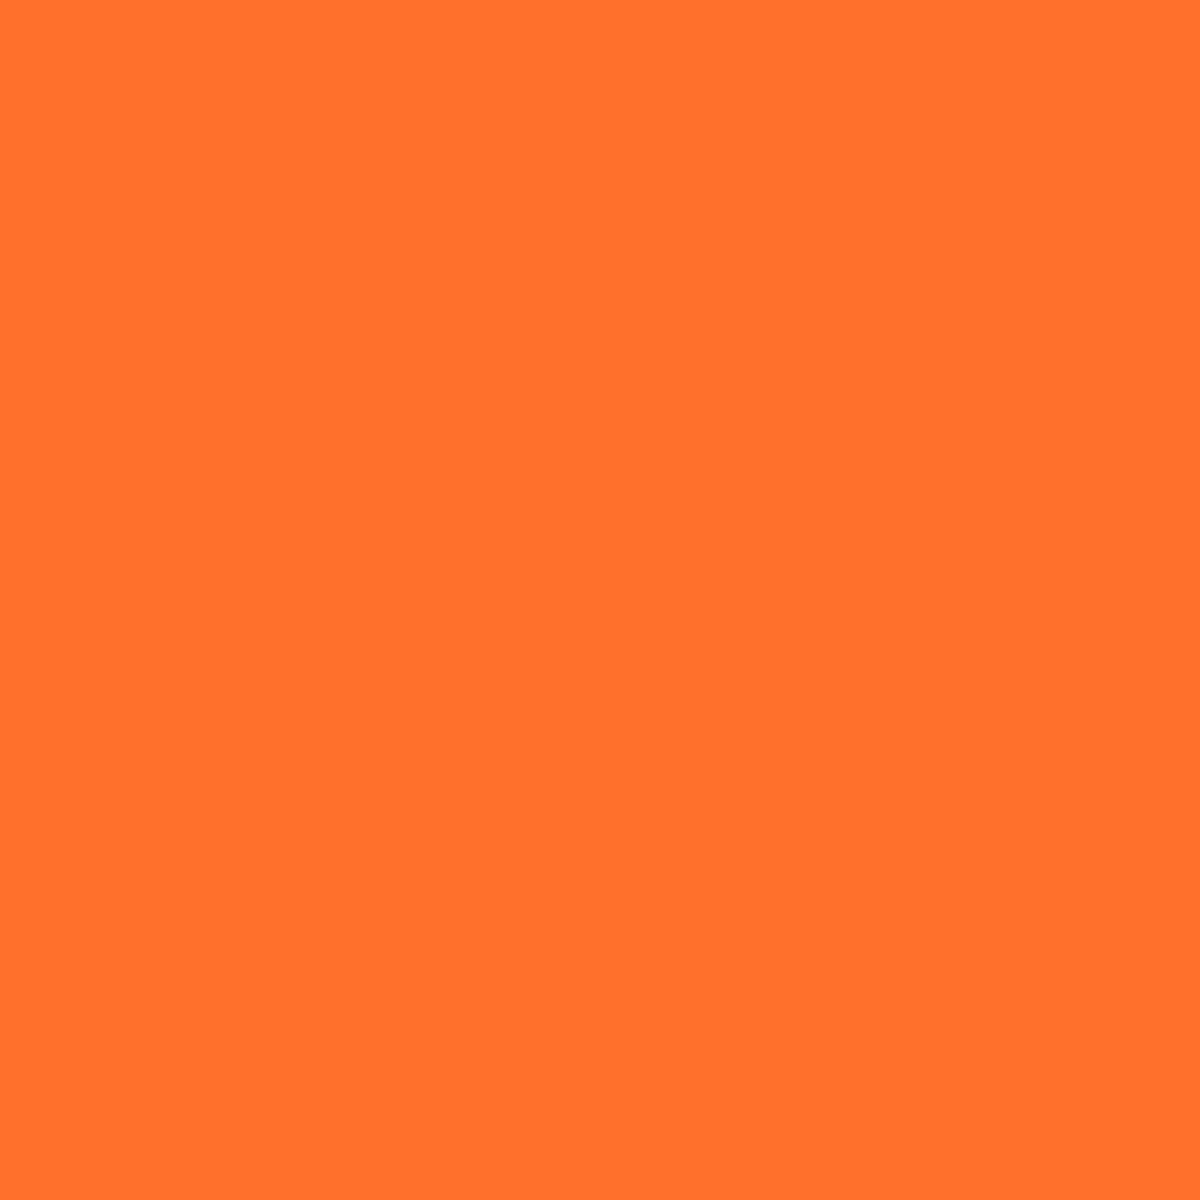 Plain Orange